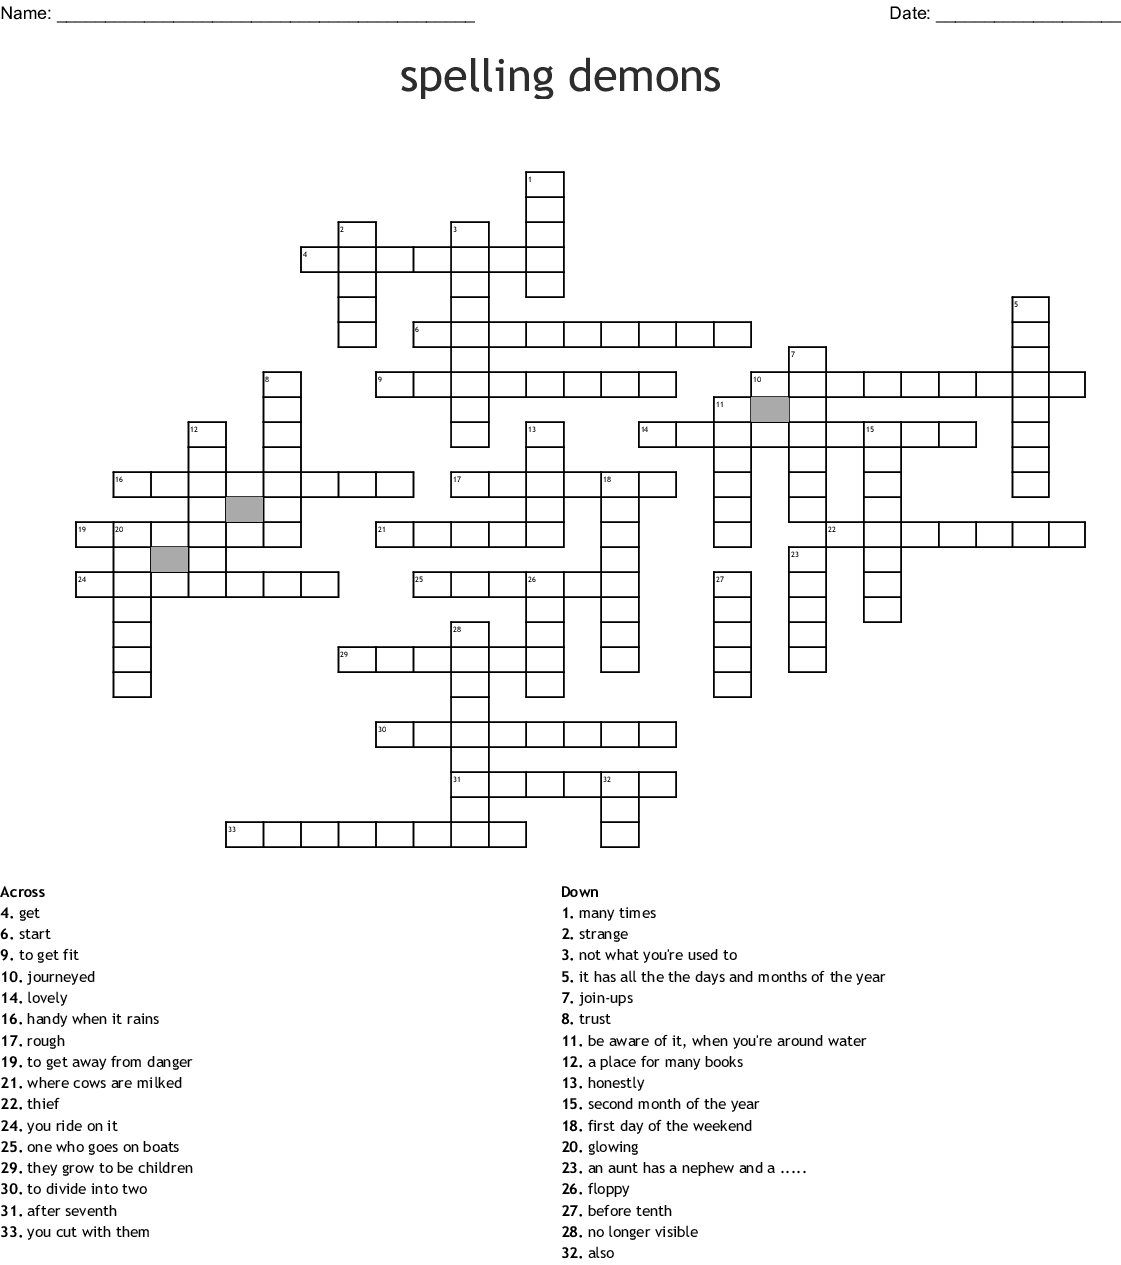 4 30 Spelling Demons Worksheet Answers | db-excel.com